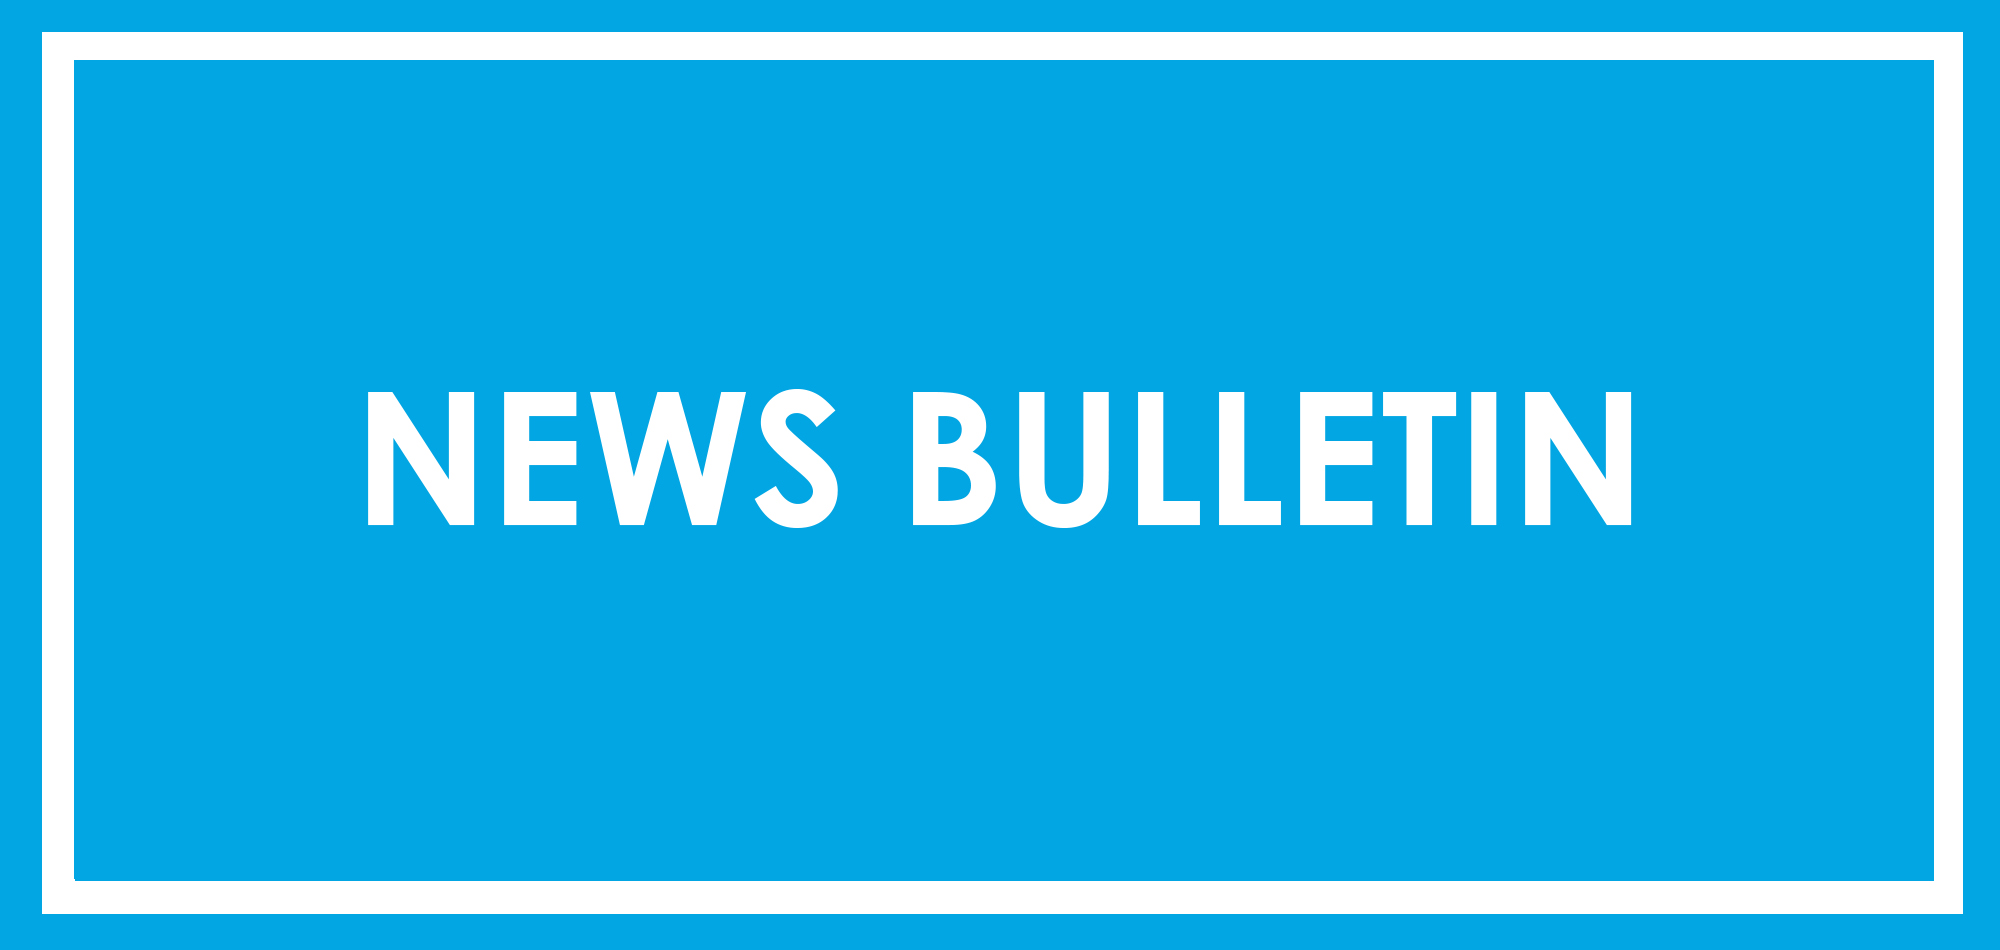 News Bulletin - 11.10.21